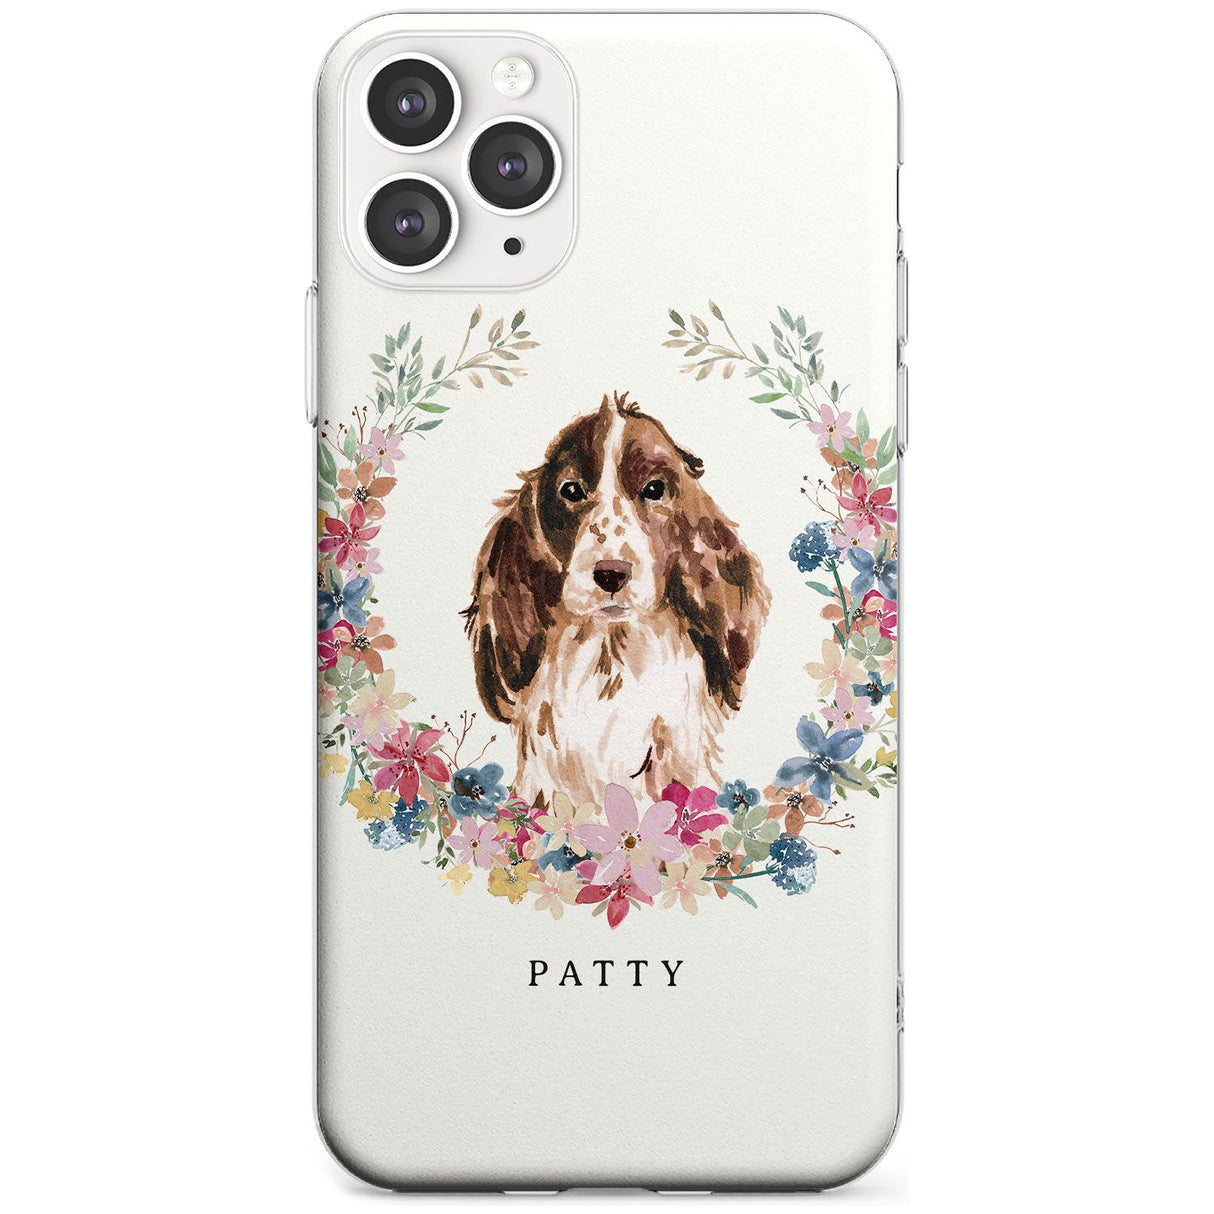 Brown Cocker Spaniel - Watercolour Dog Portrait Slim TPU Phone Case for iPhone 11 Pro Max